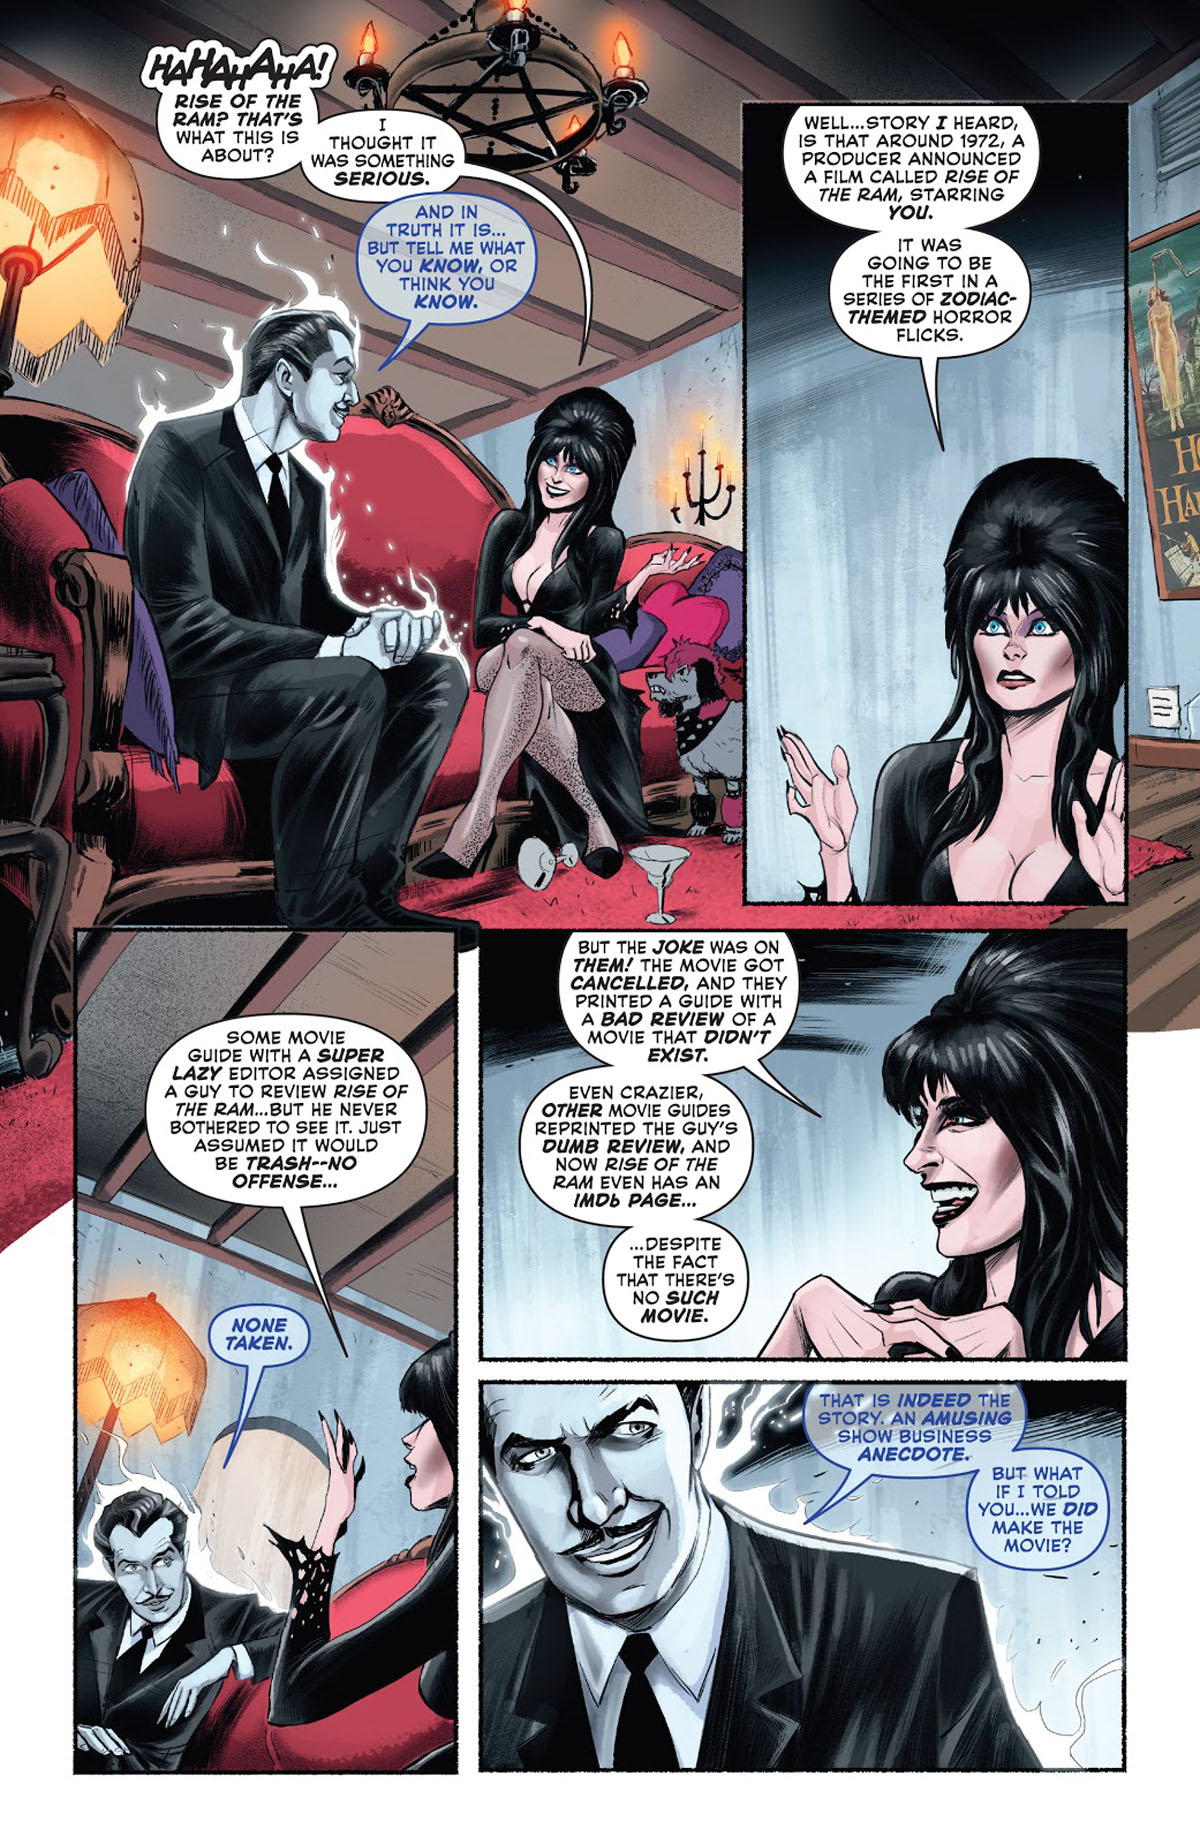 Elvira Meets Vincent Price #1 page 14 by Juan Samu